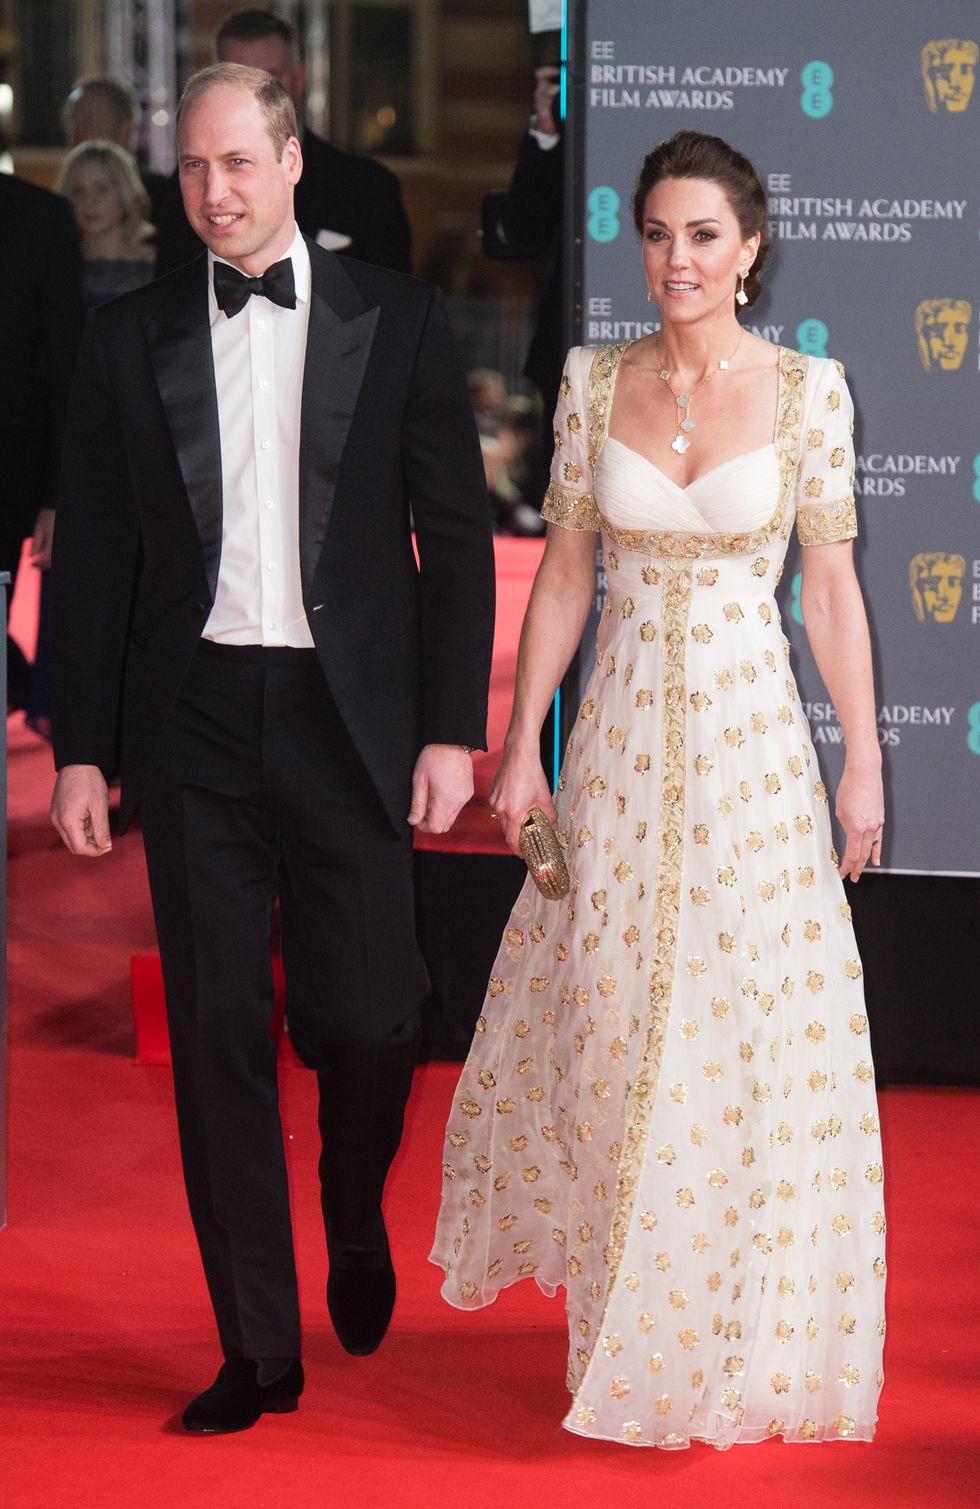 ee british academy film awards 2020 red carpet arrivals